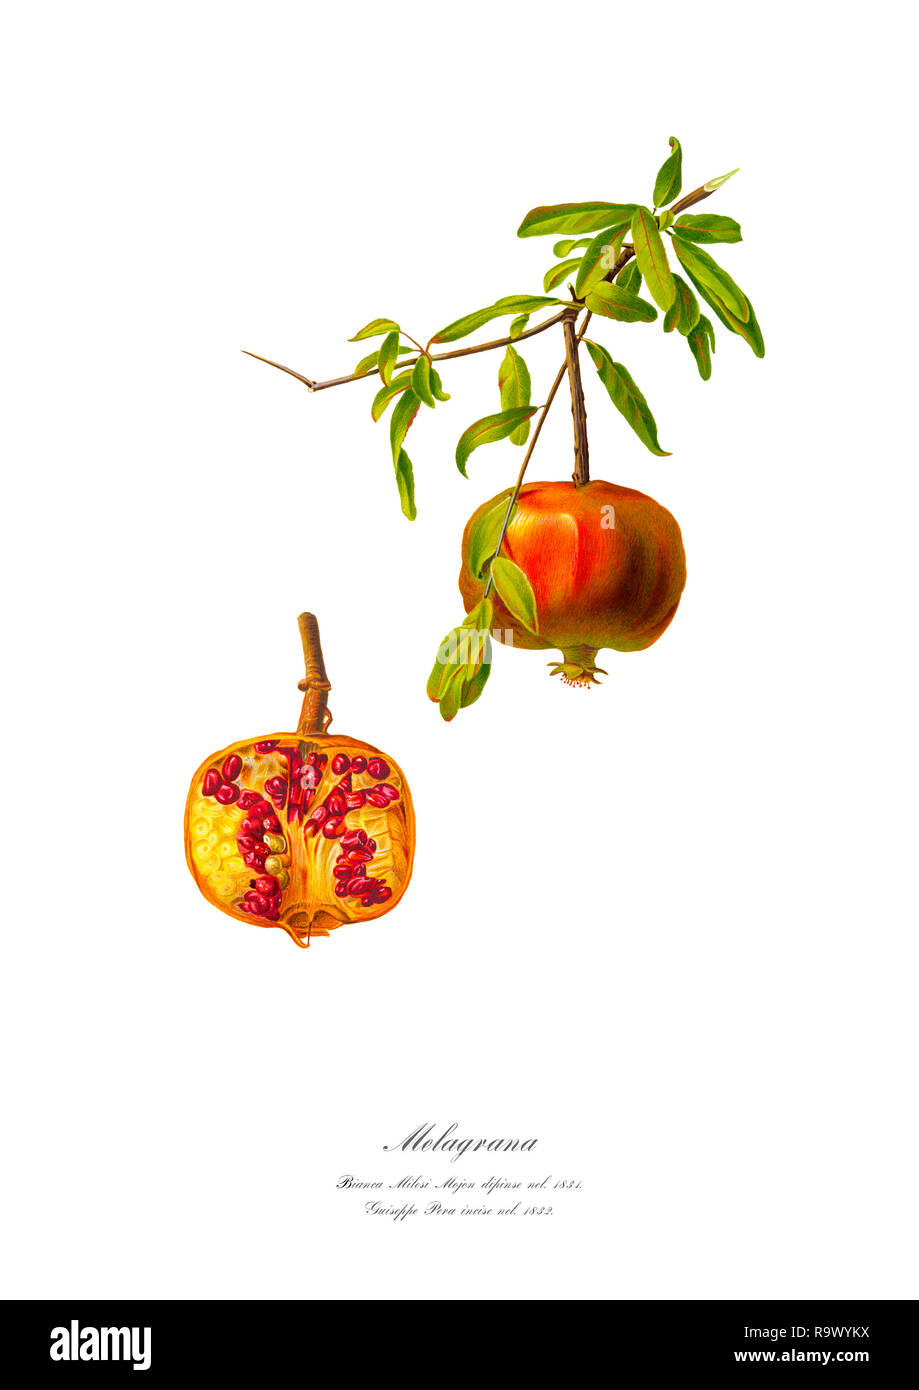 Vintage unique botanical illustration of a pomegranate Stock Photo